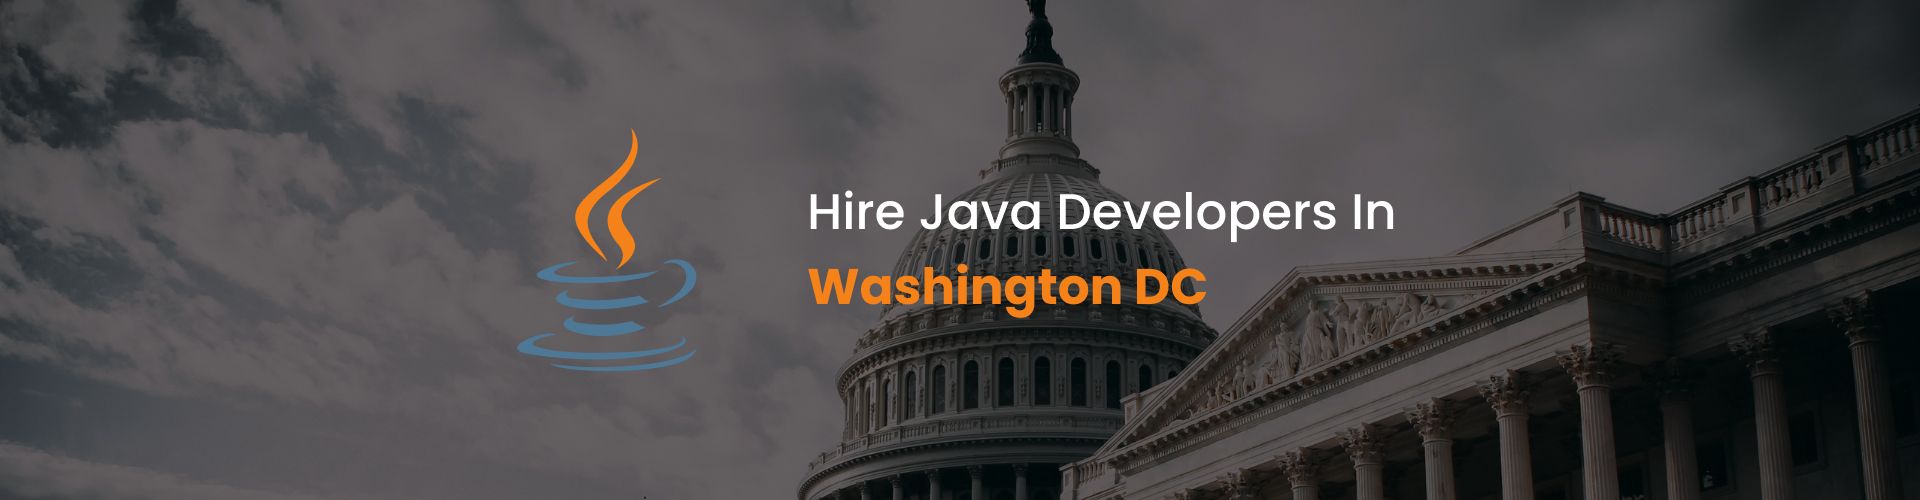 hire java developers in washington dc